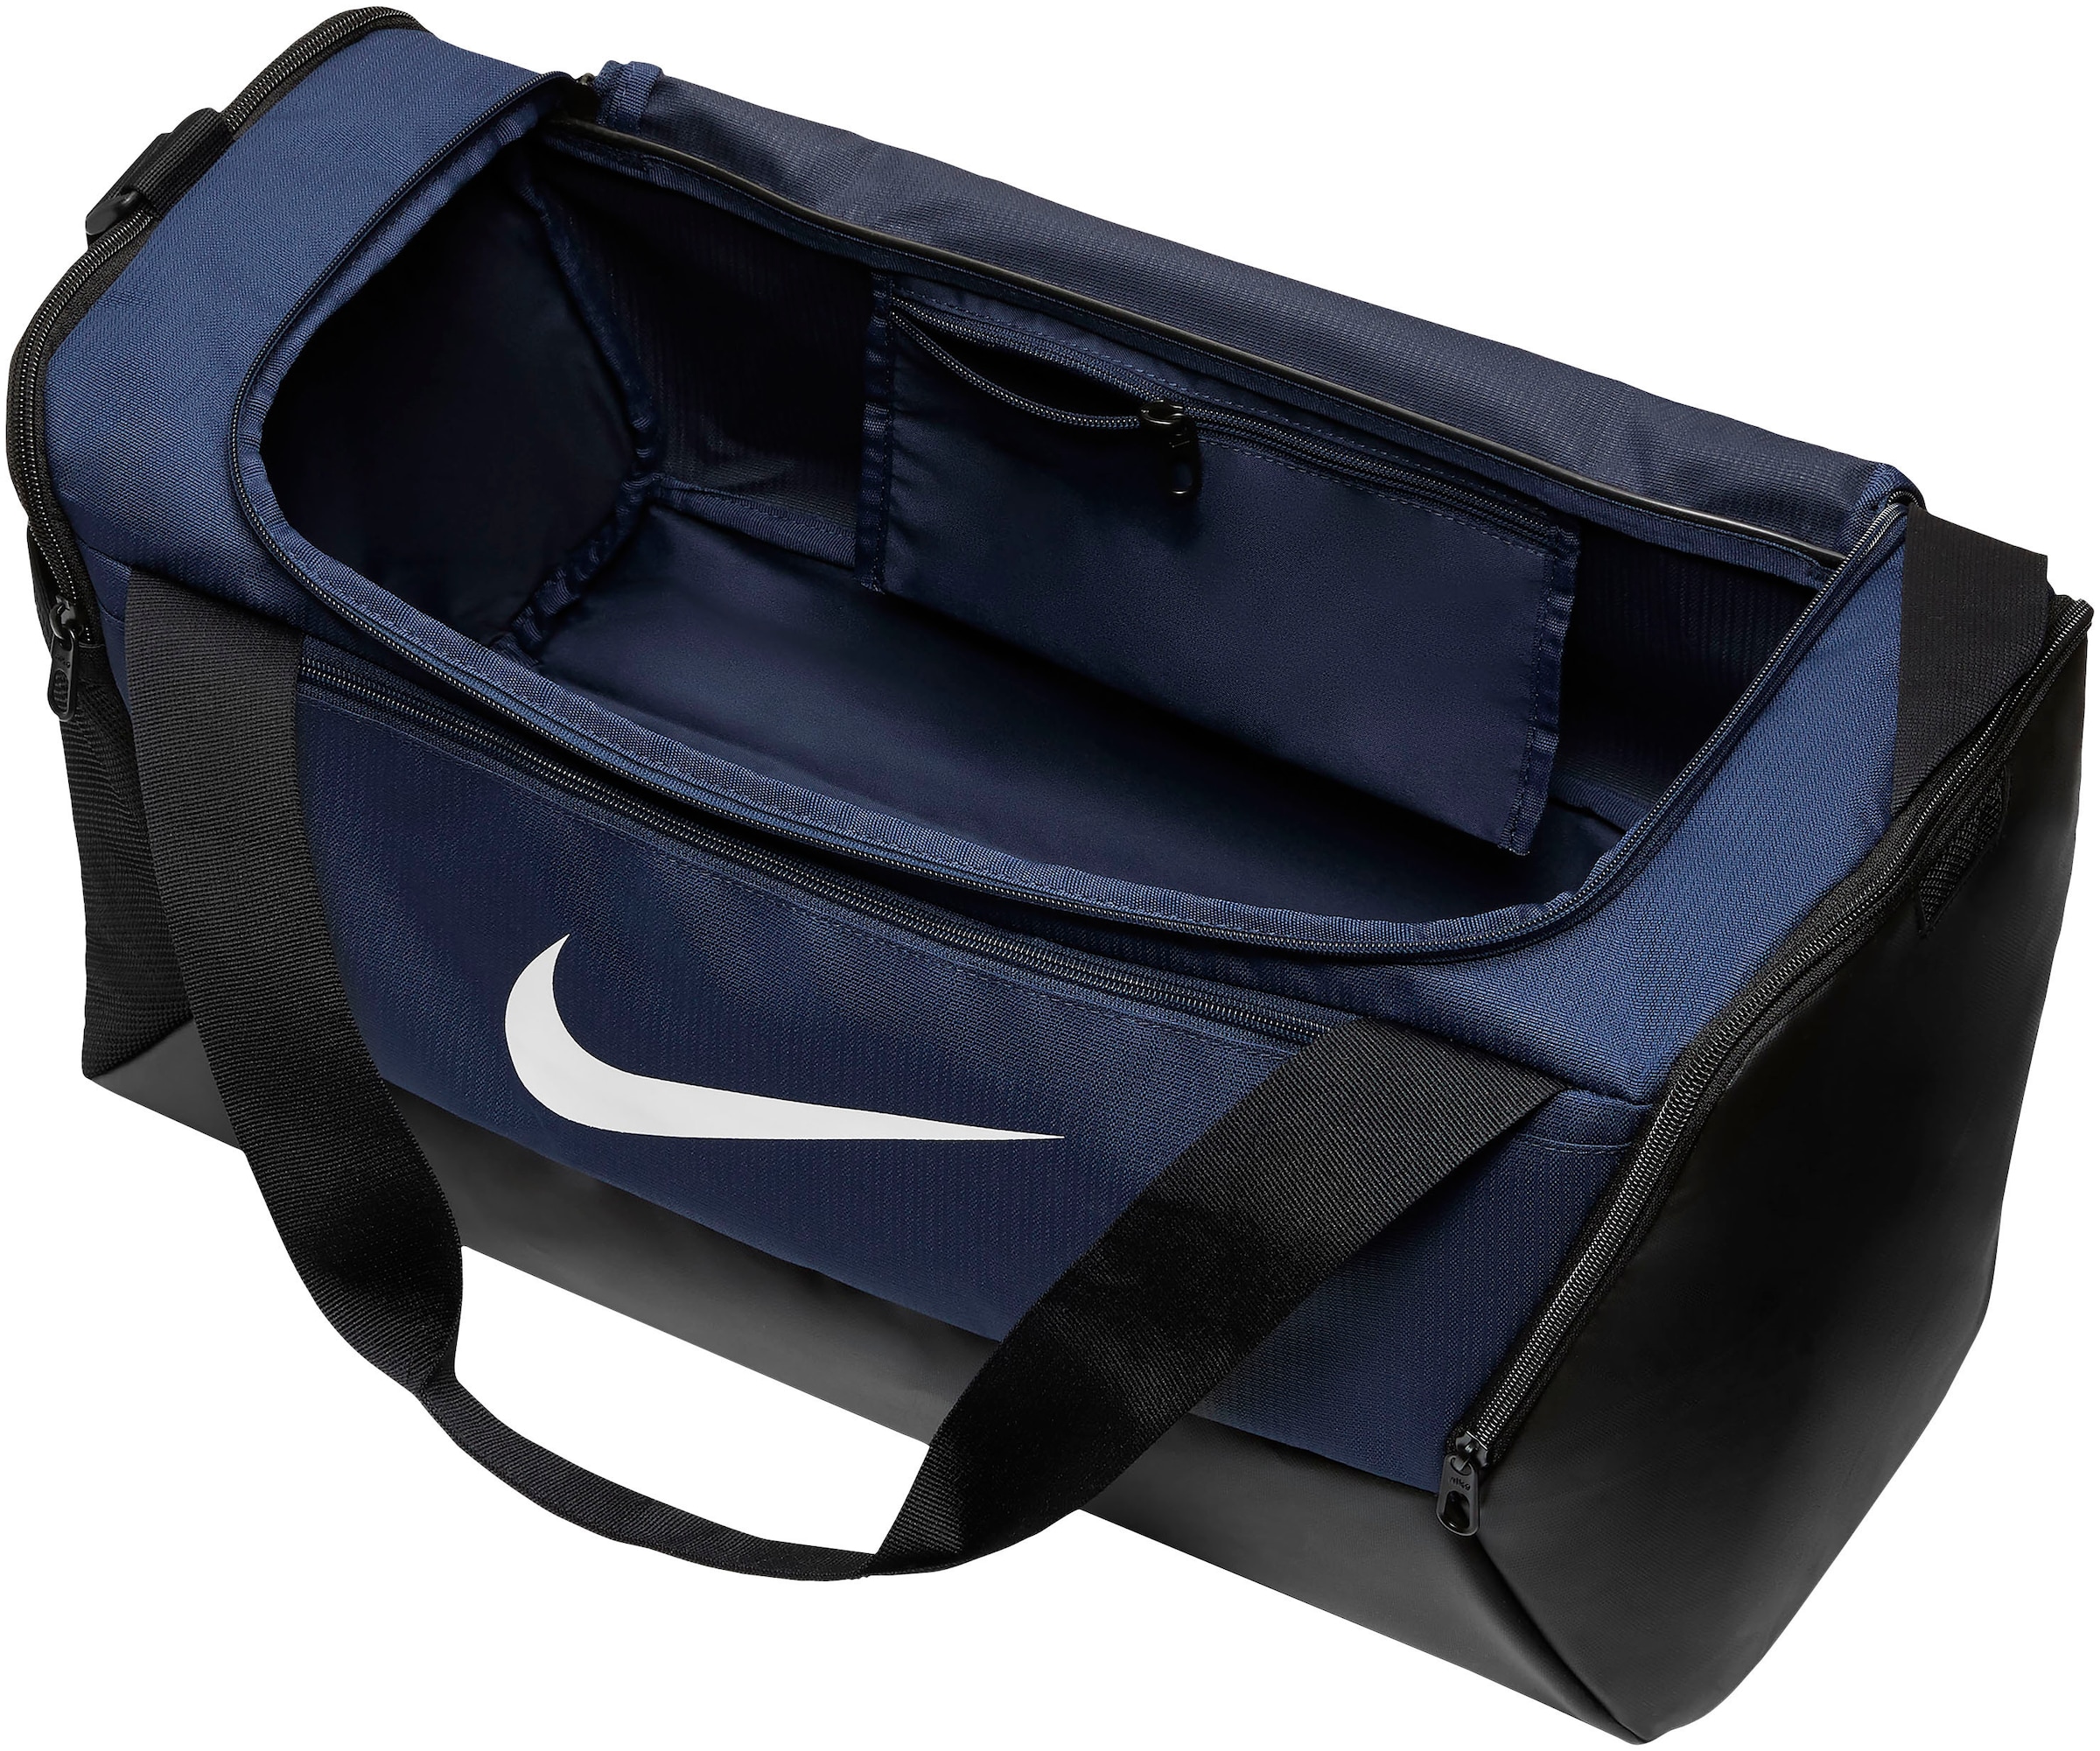 Nike Sporttasche »BRASILIA . TRAINING DUFFEL BAG«